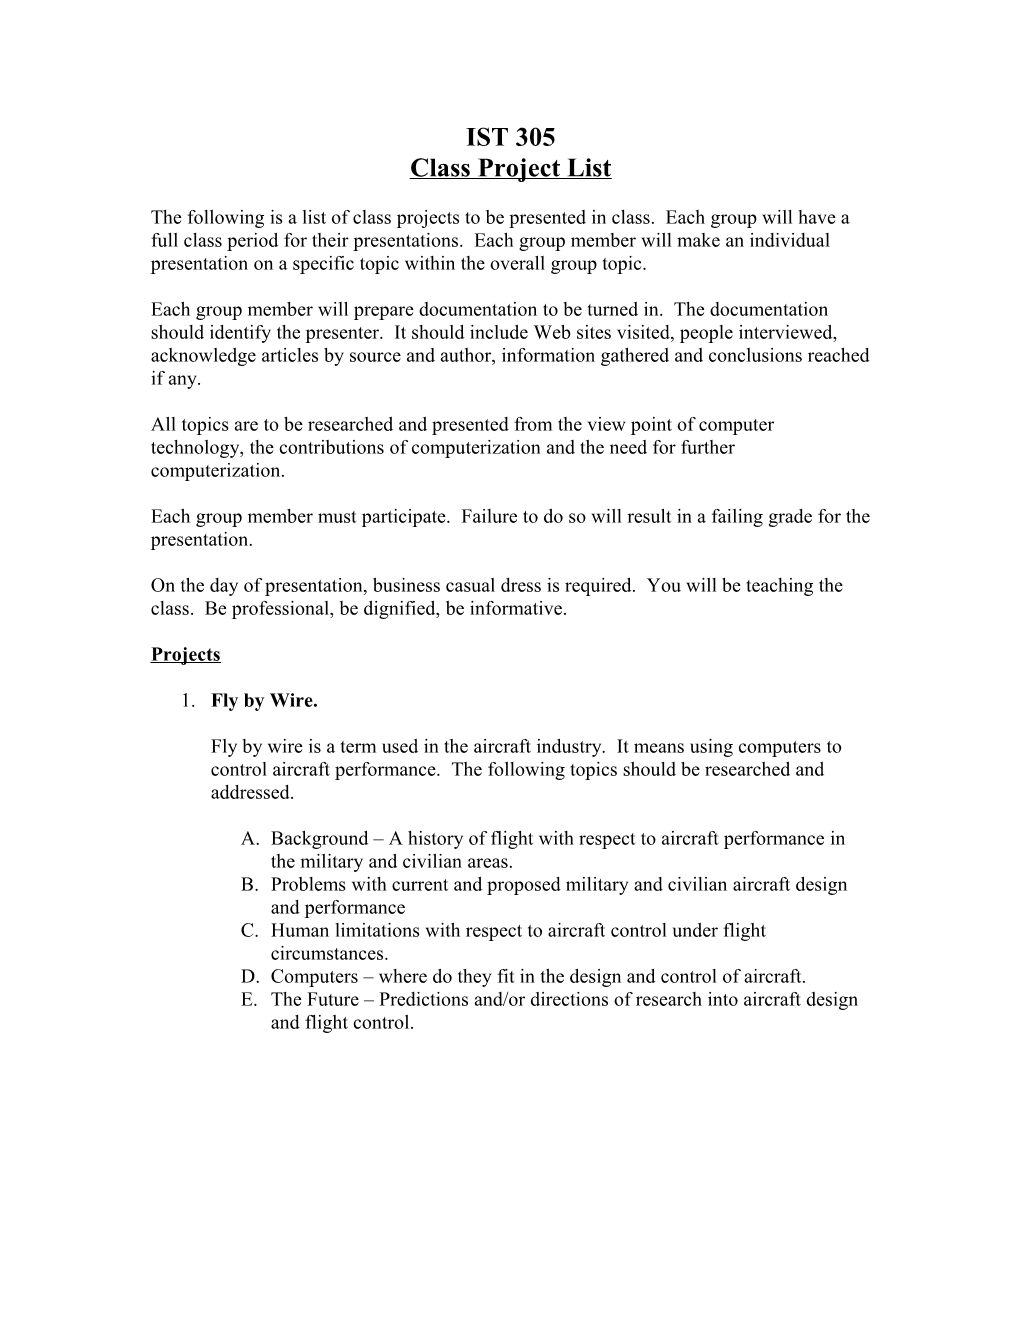 Class Project List